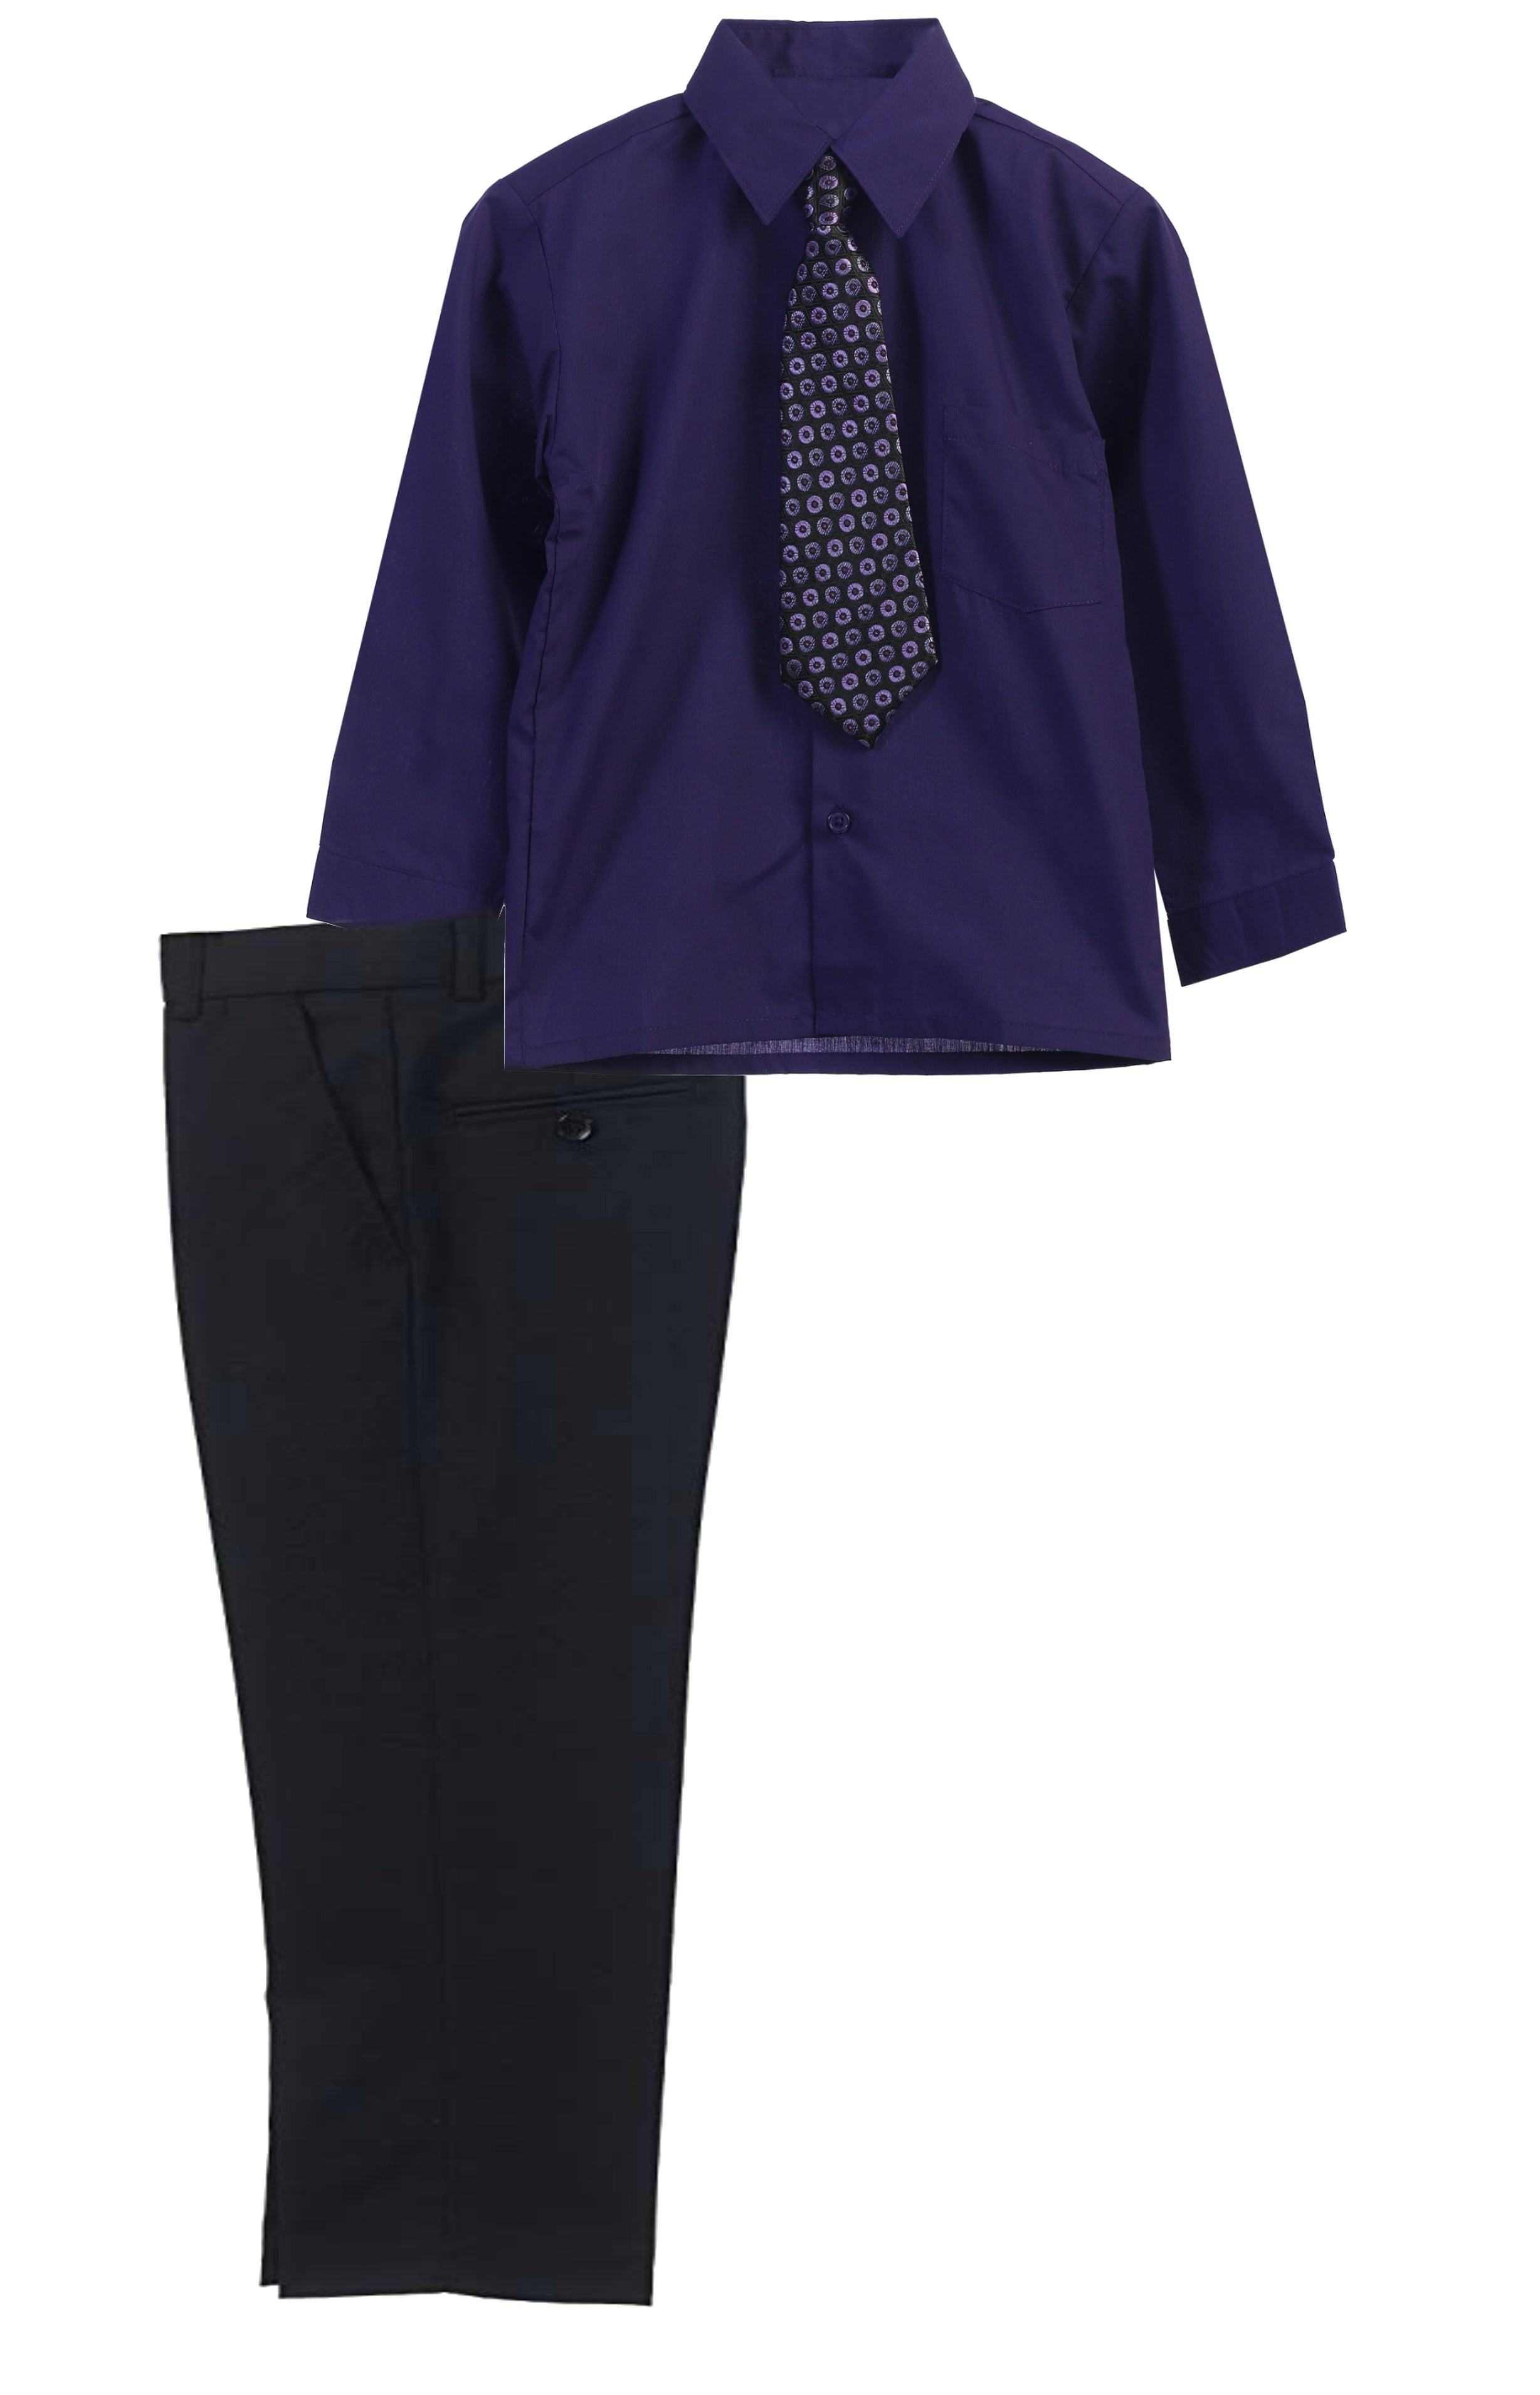 Woman in purple shirt and black pants smiling.... - Stock Illustration  [110180480] - PIXTA